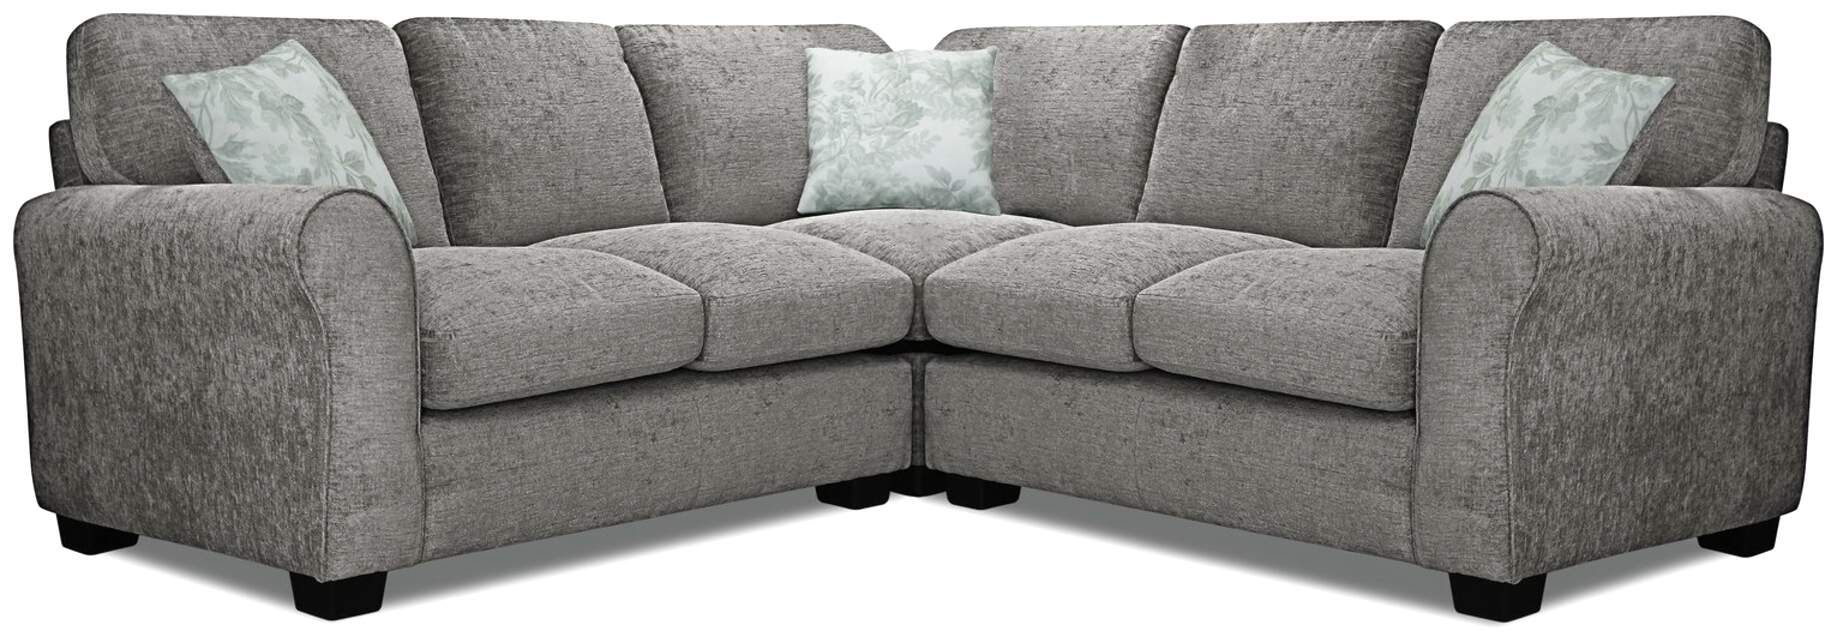 argos sofa bed offers